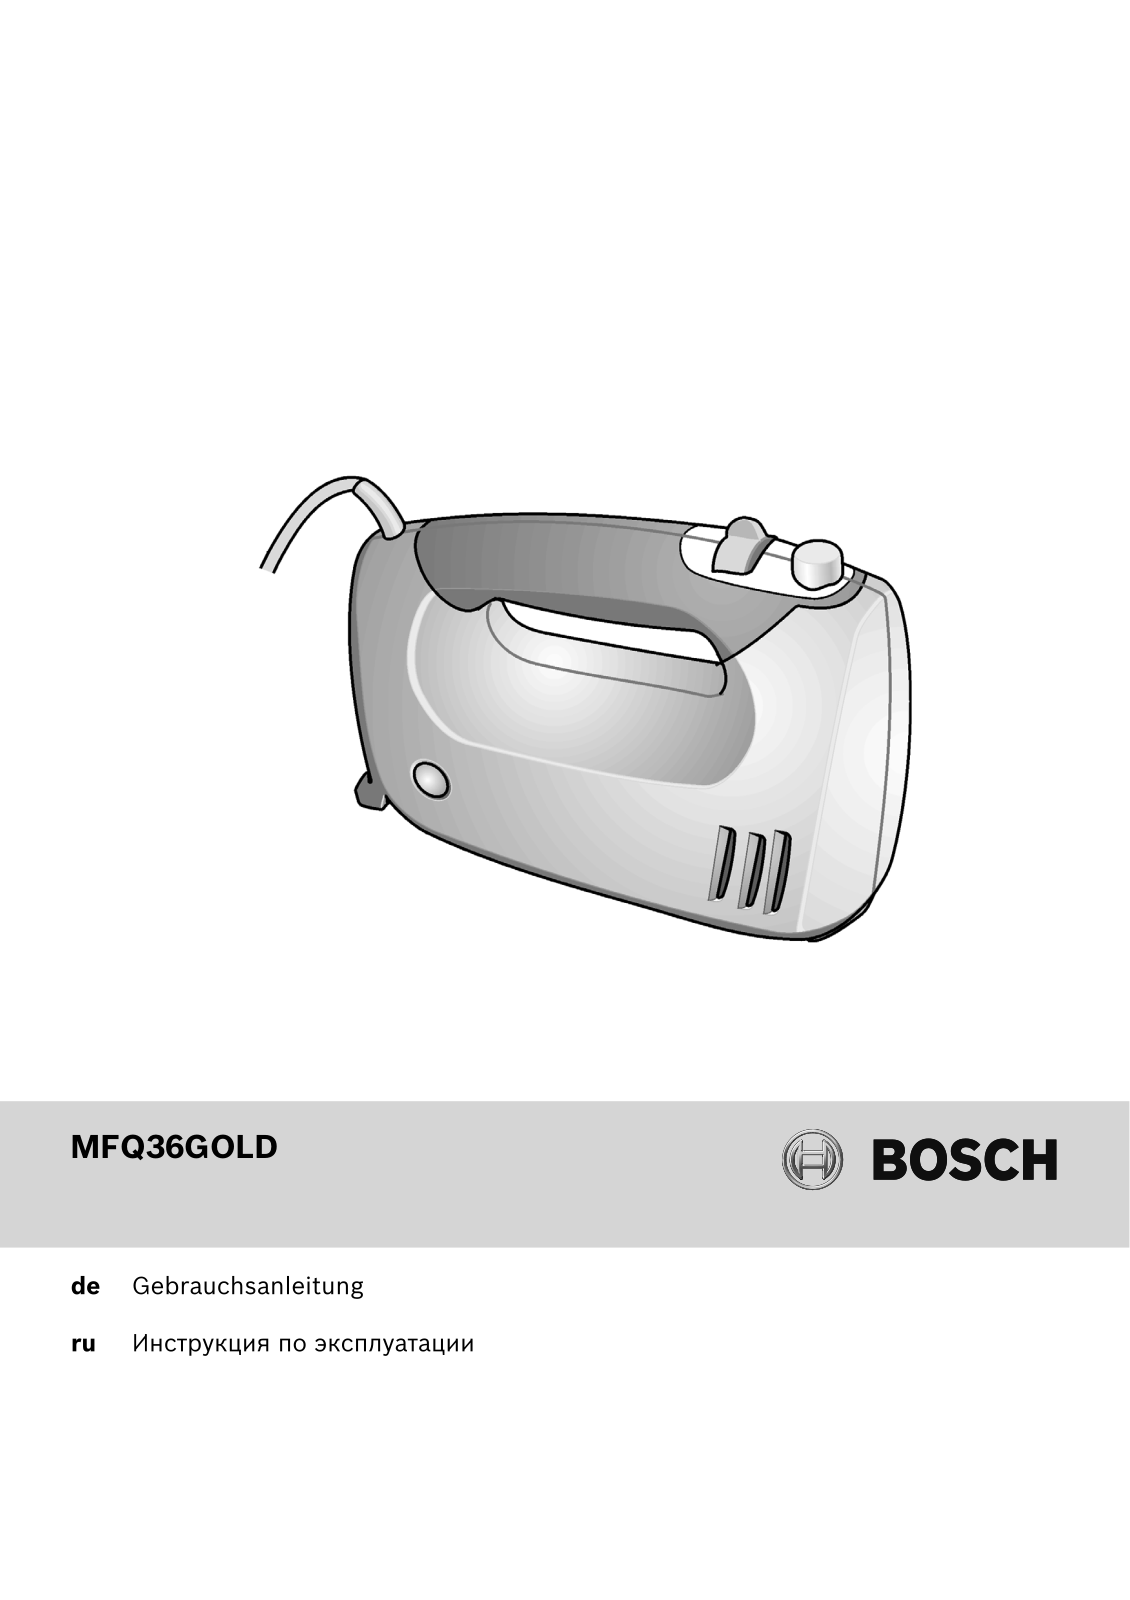 Bosch MFQ 36 GOLD User Manual